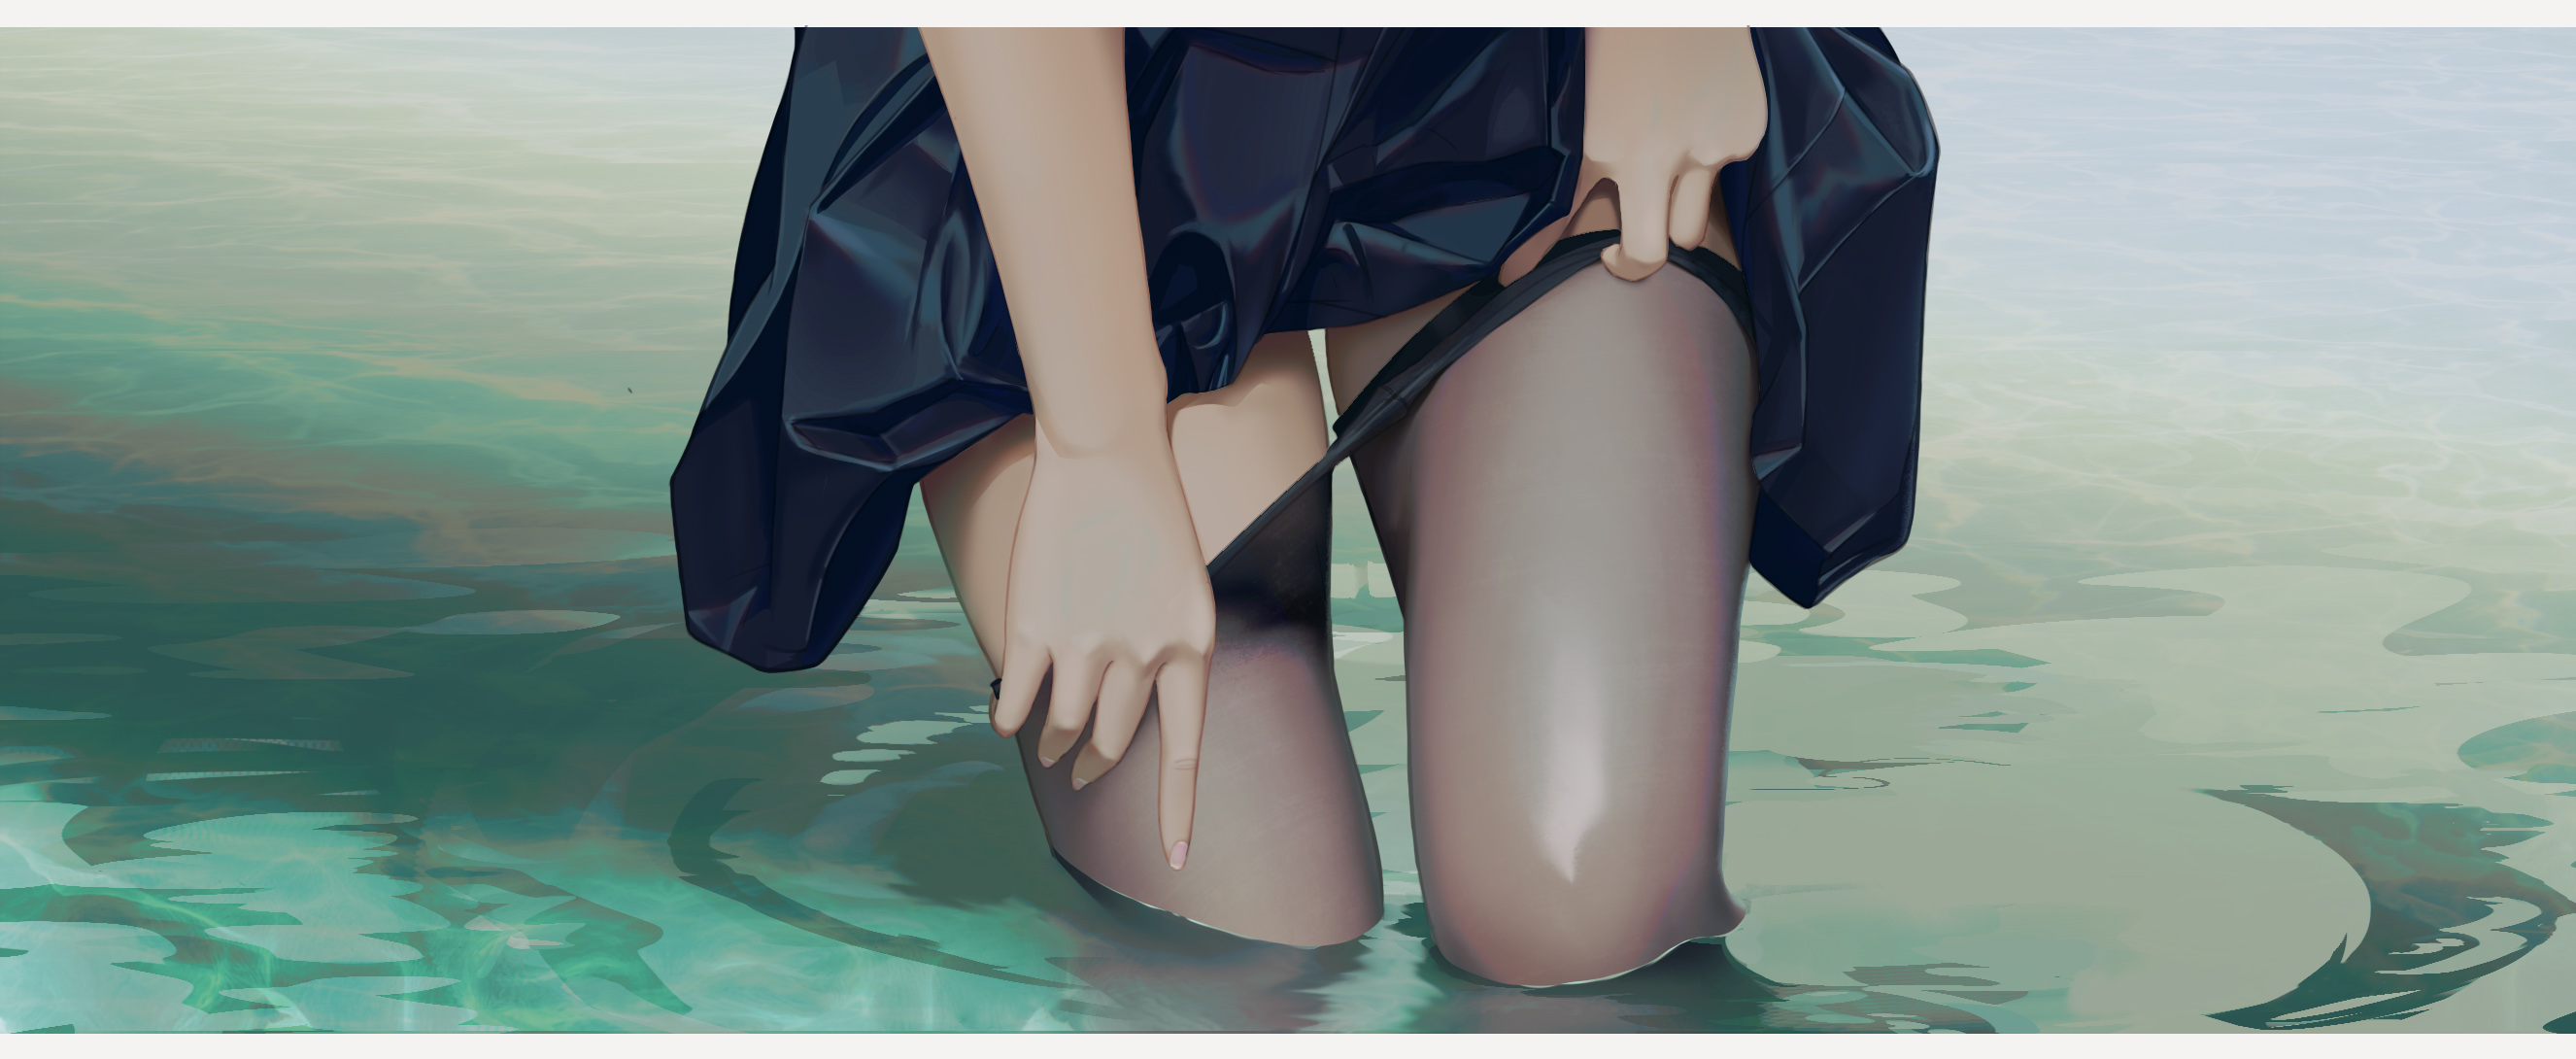 Anime 2652x1090 anime anime girls digital art artwork 2D portrait pantyhose skirt thighs water pulling clothing qizhu